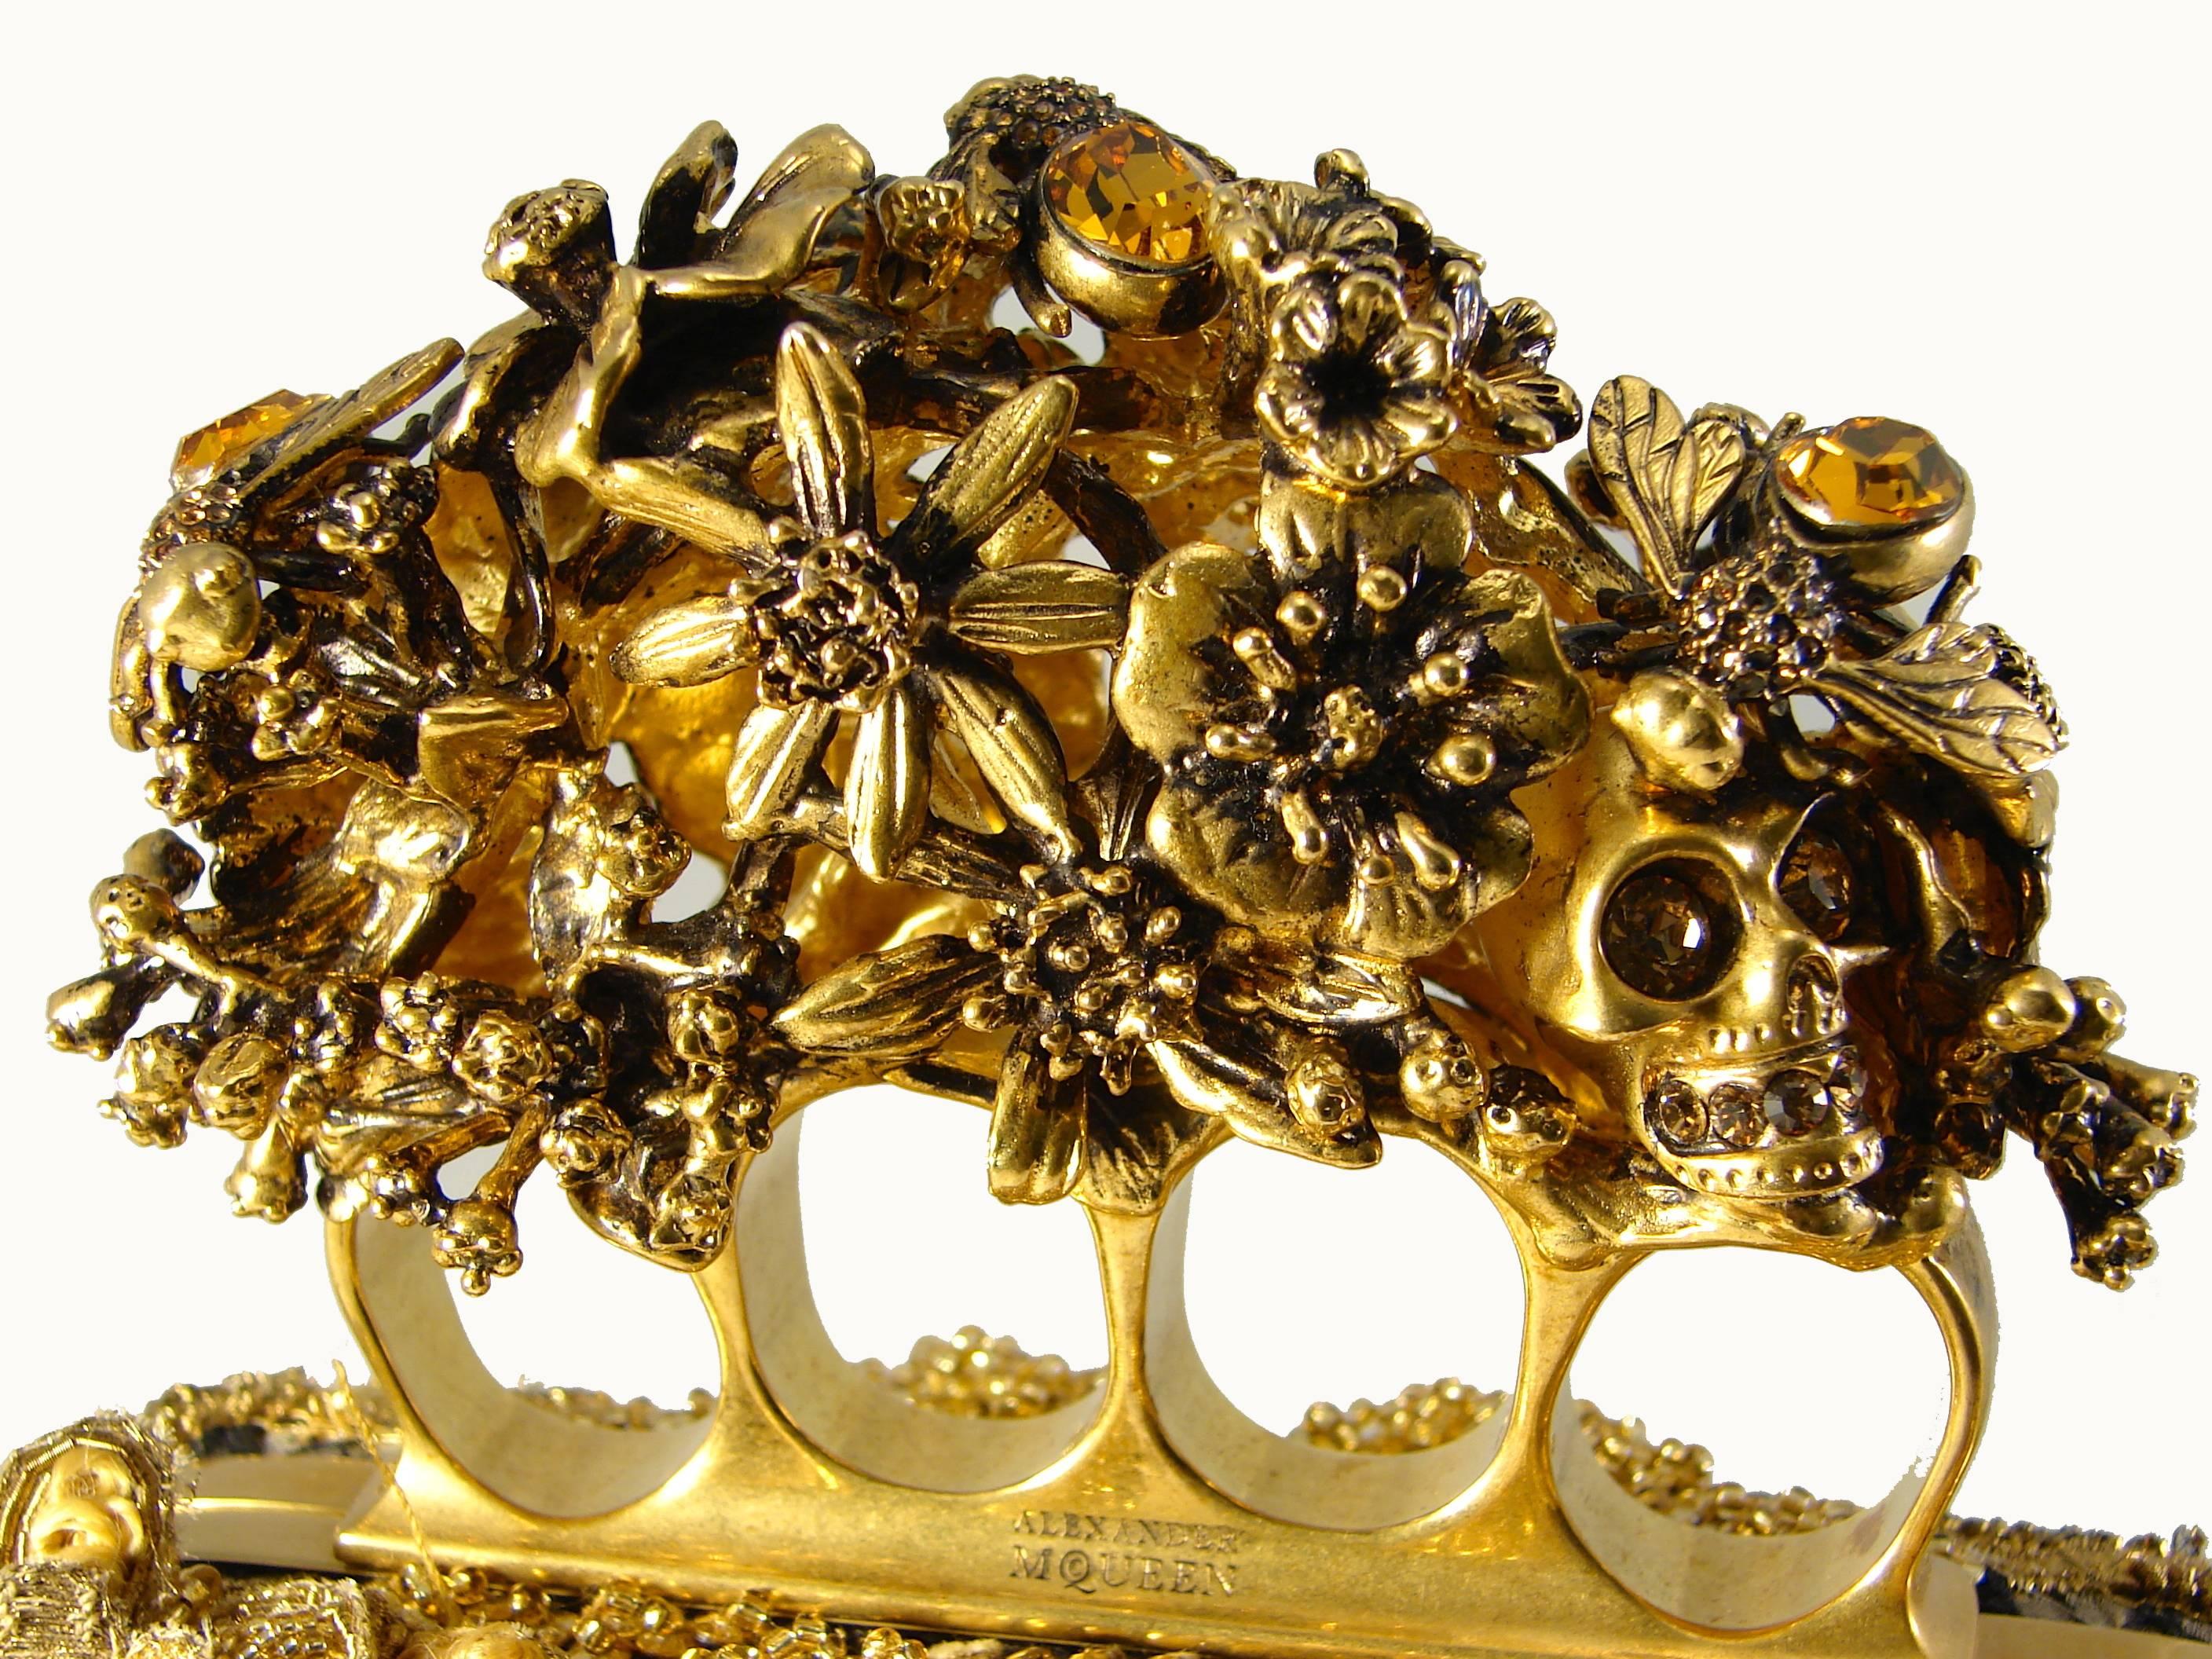 Opulent Alexander McQueen Raso Seta Knuckle Box Clutch Bag in Gold 2014  2